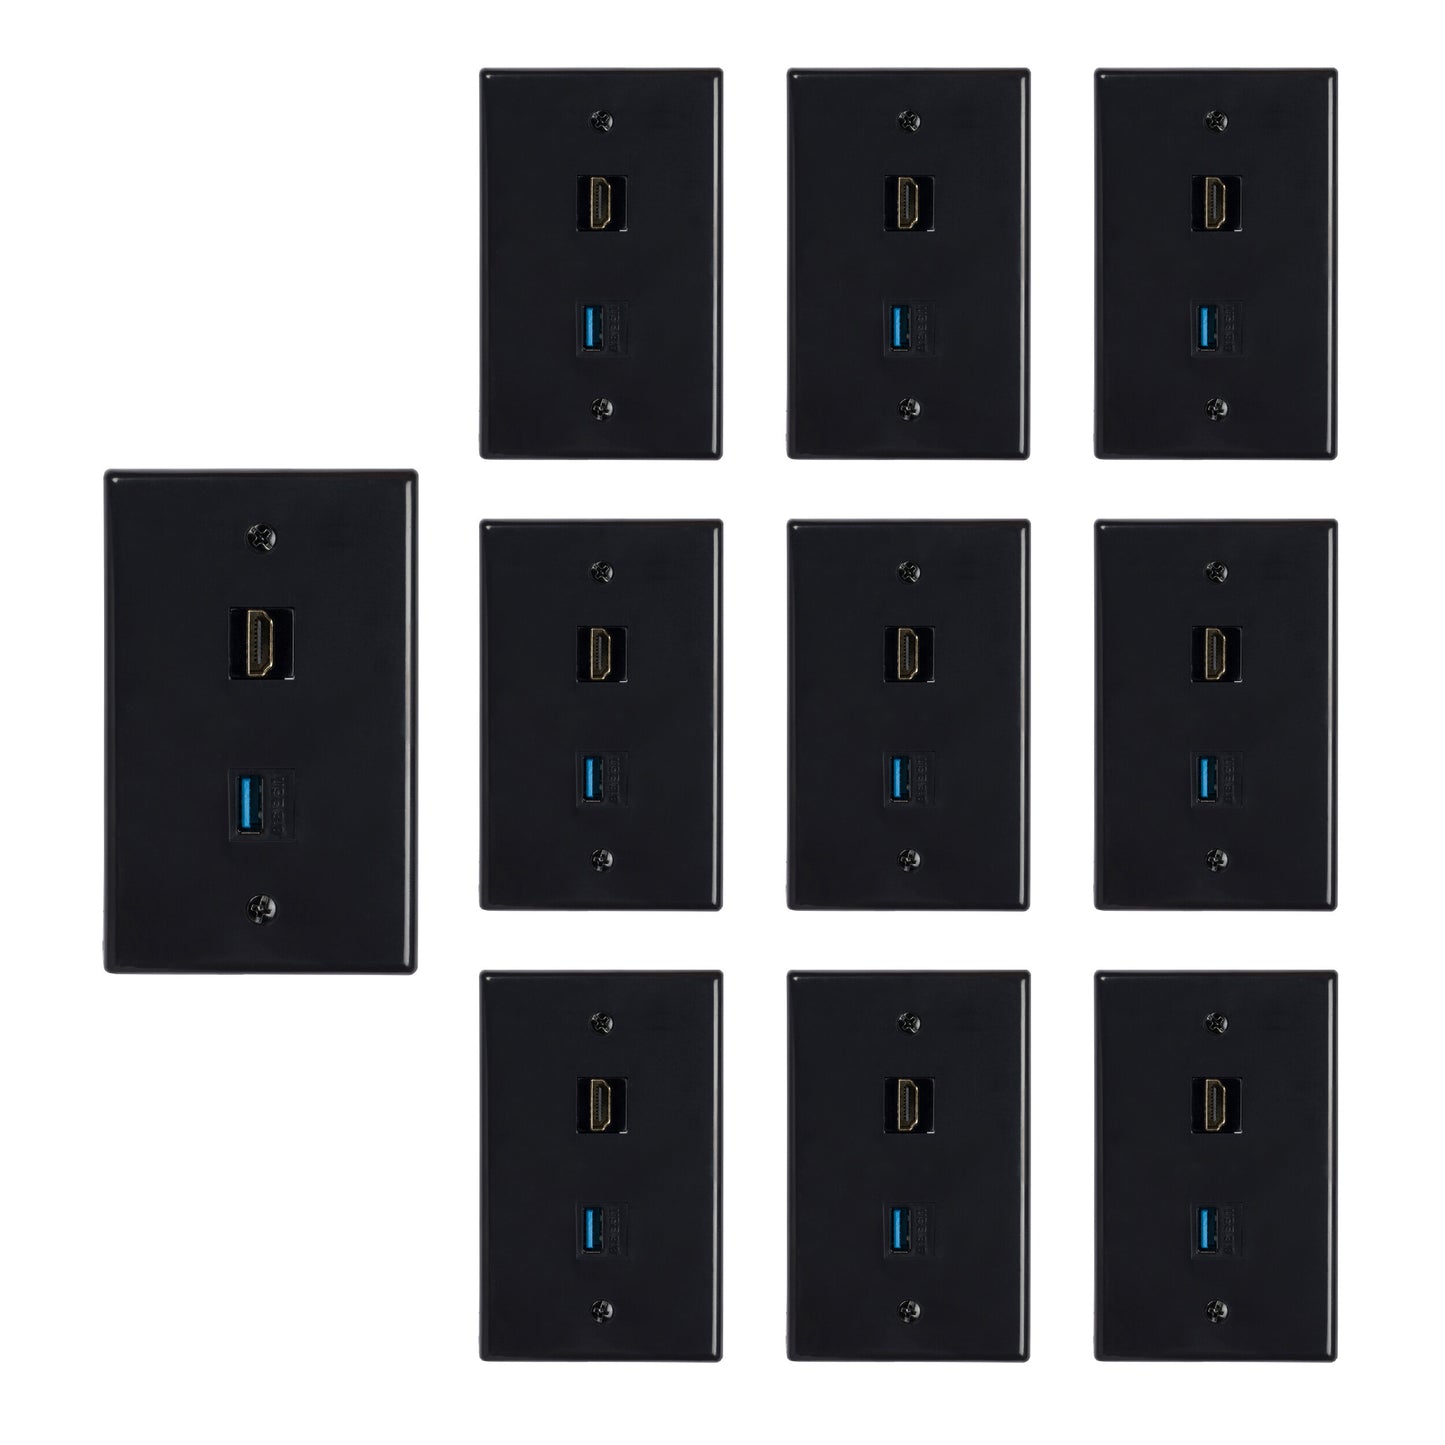 2 Port Keystone, 1 Port HDMI and 1 Port USB 3.0 Wall Plate (Black) - Milena International Inc